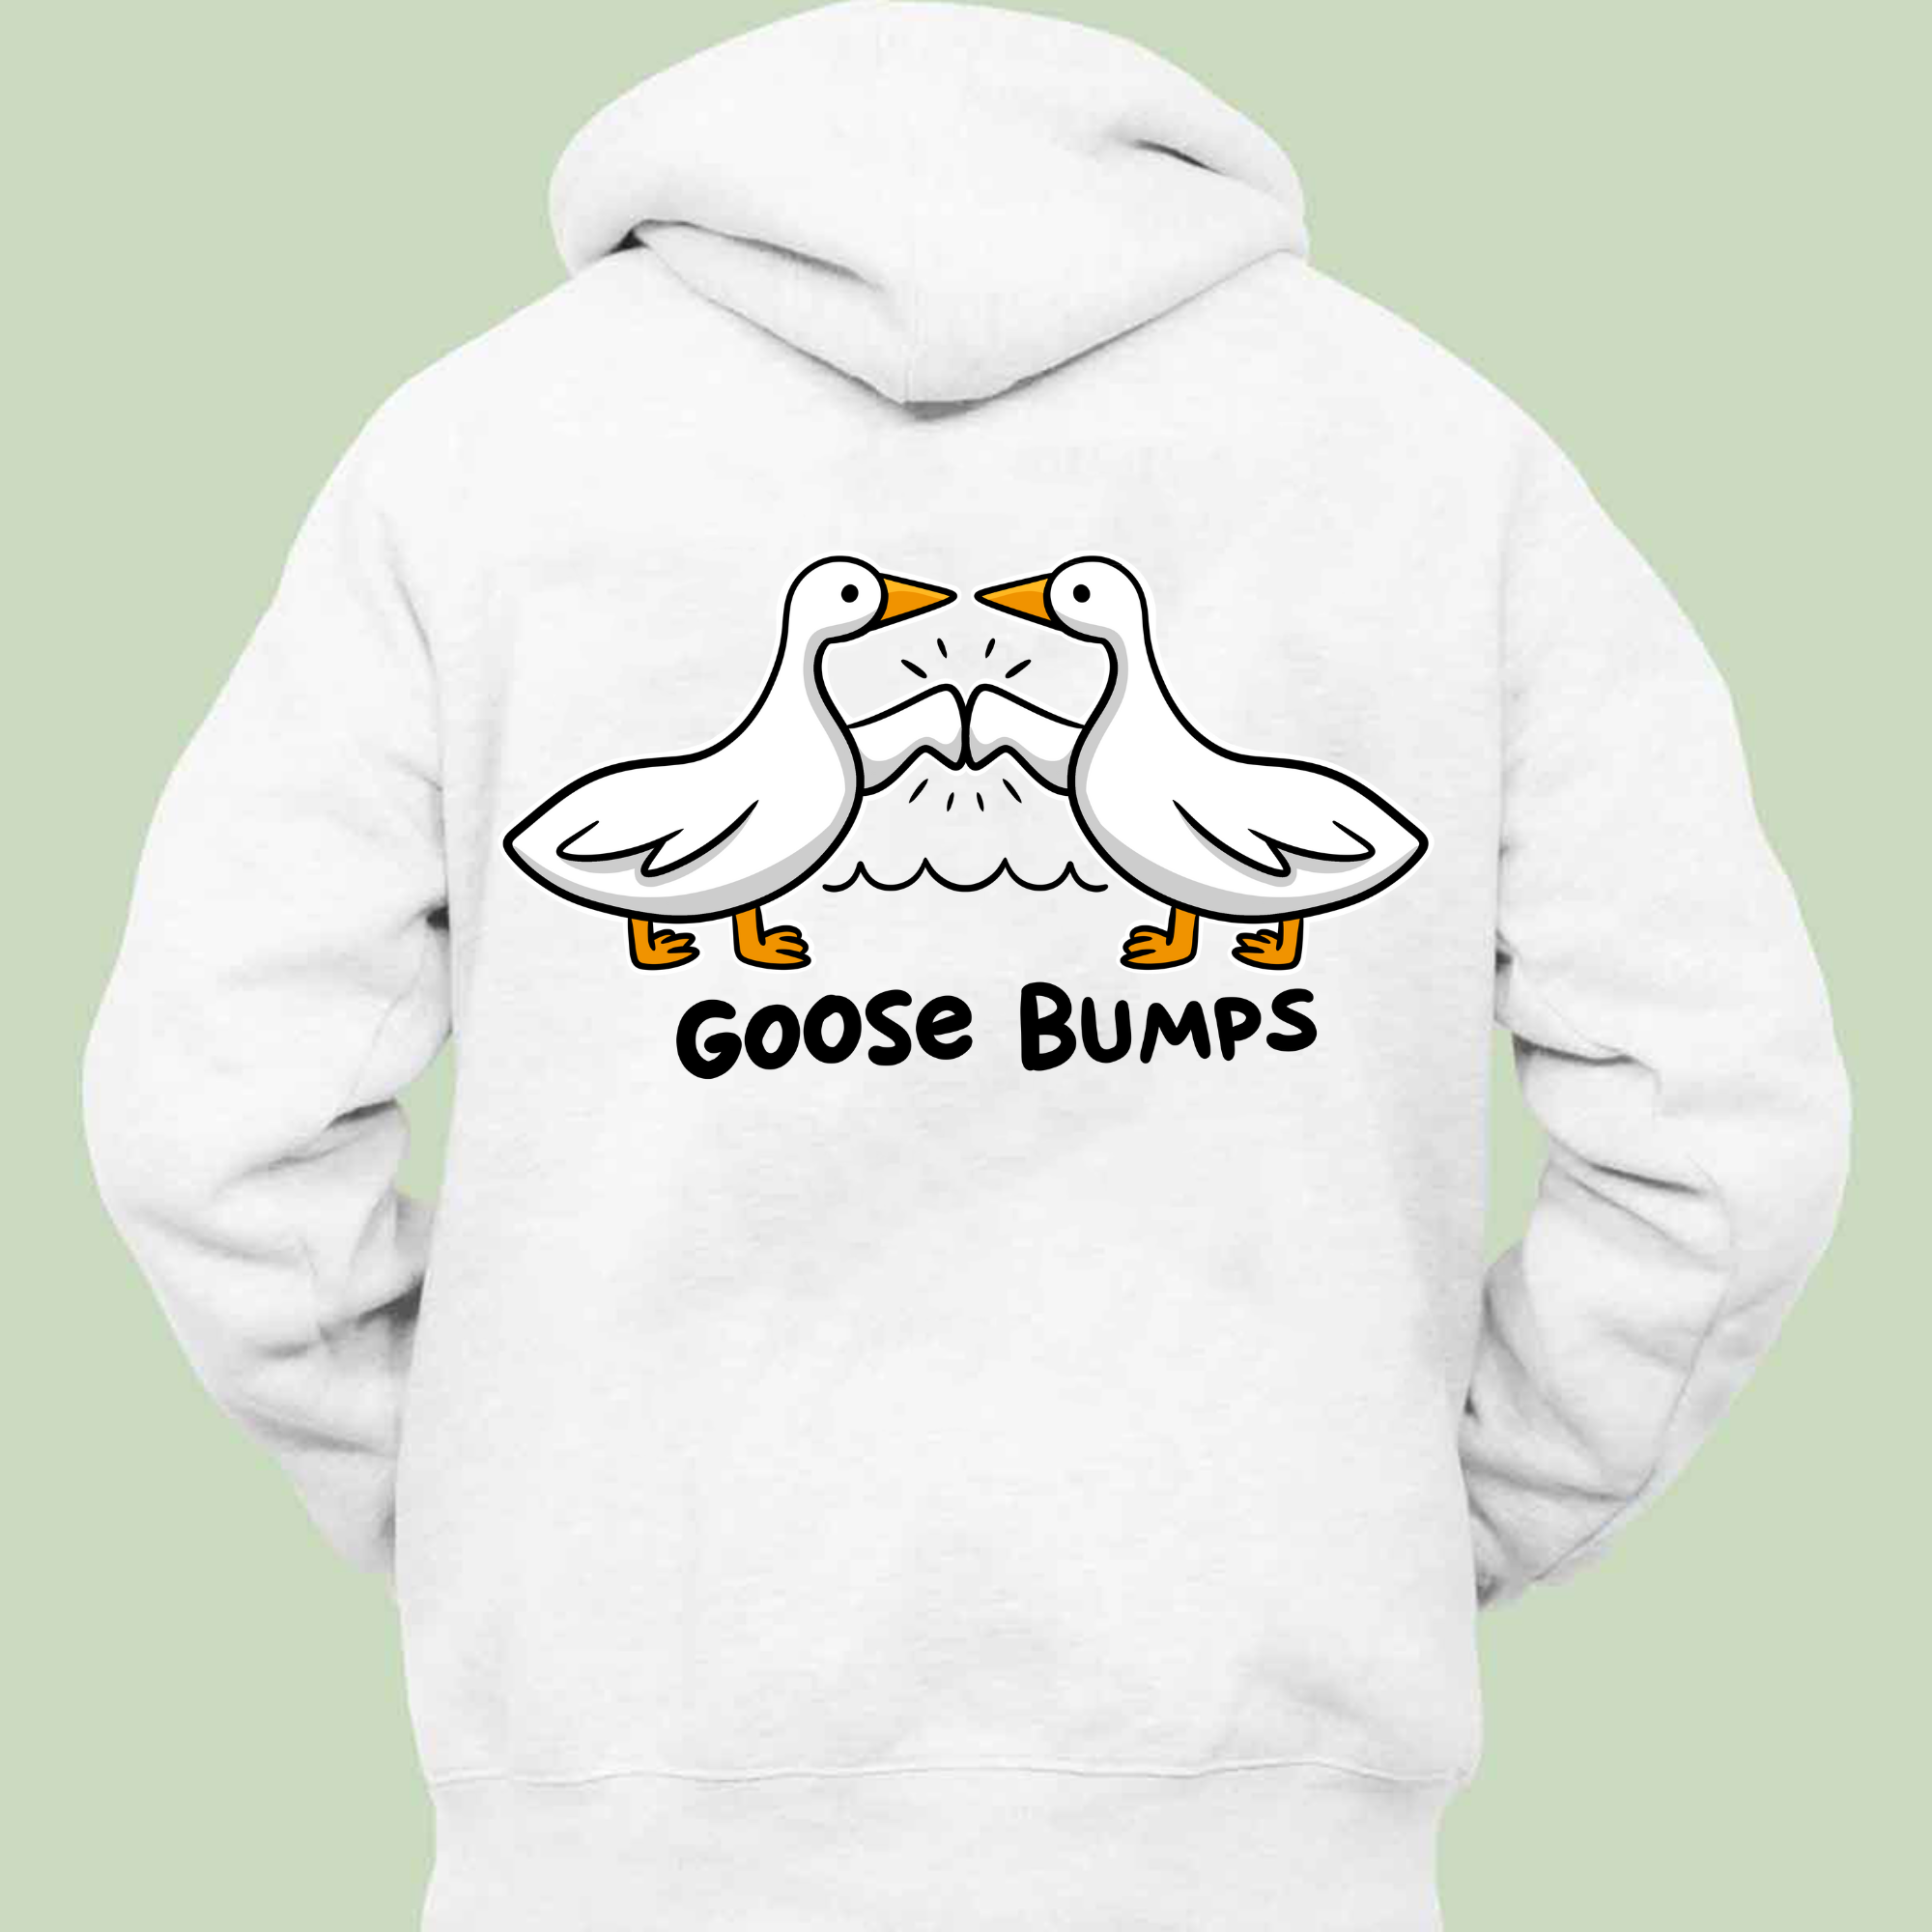 Goose Bumps - Hoodie Unisex Backprint